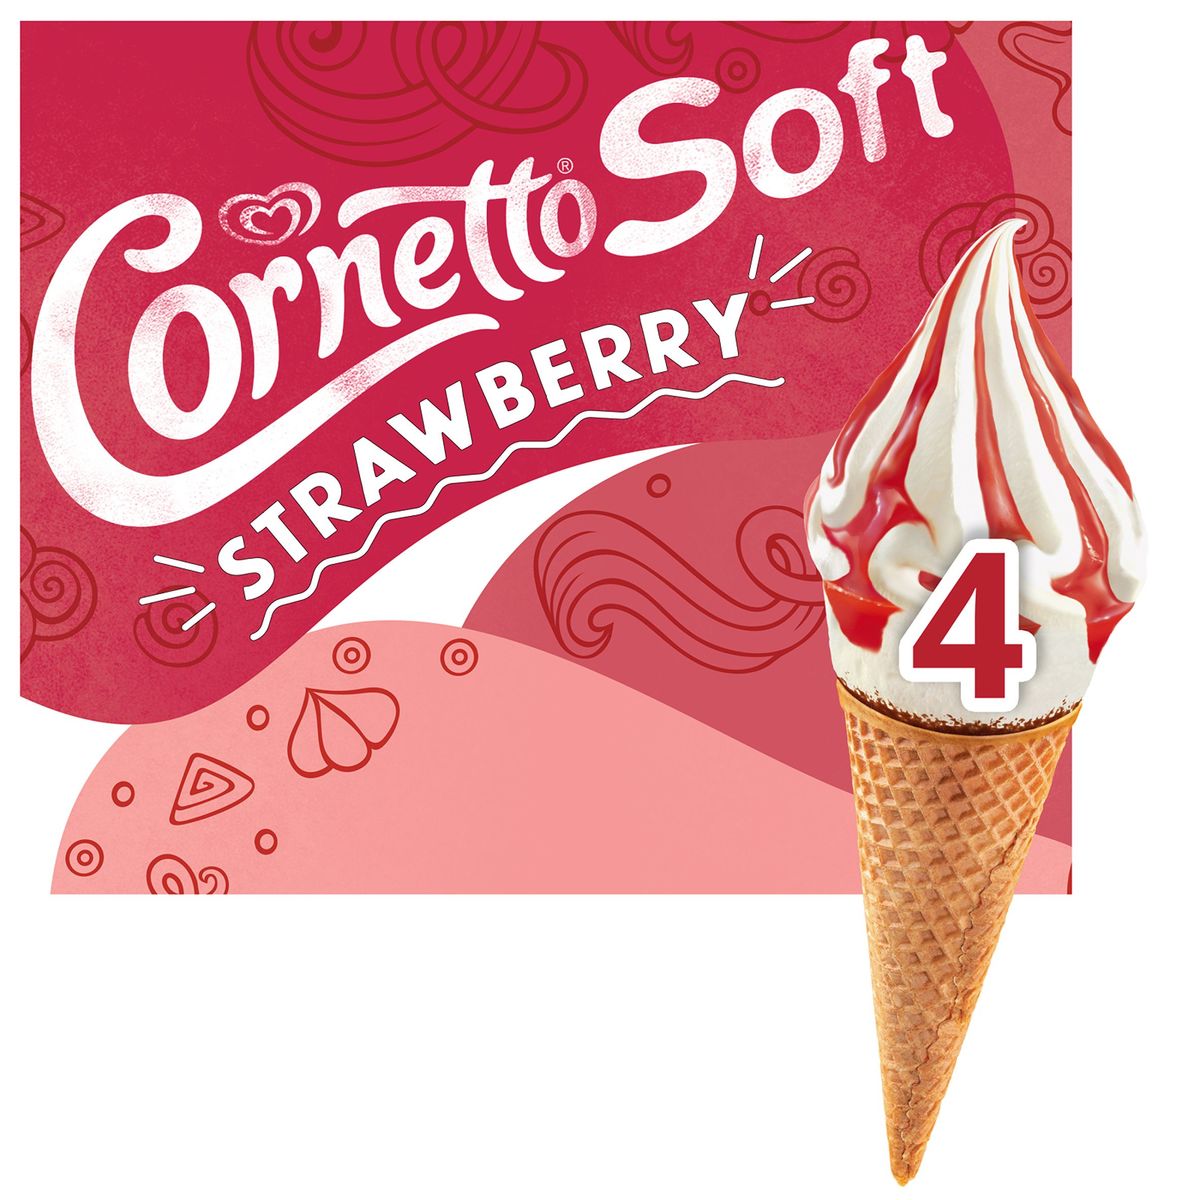 Cornetto Ola Ijs Soft Strawberry multipack4x140 ml